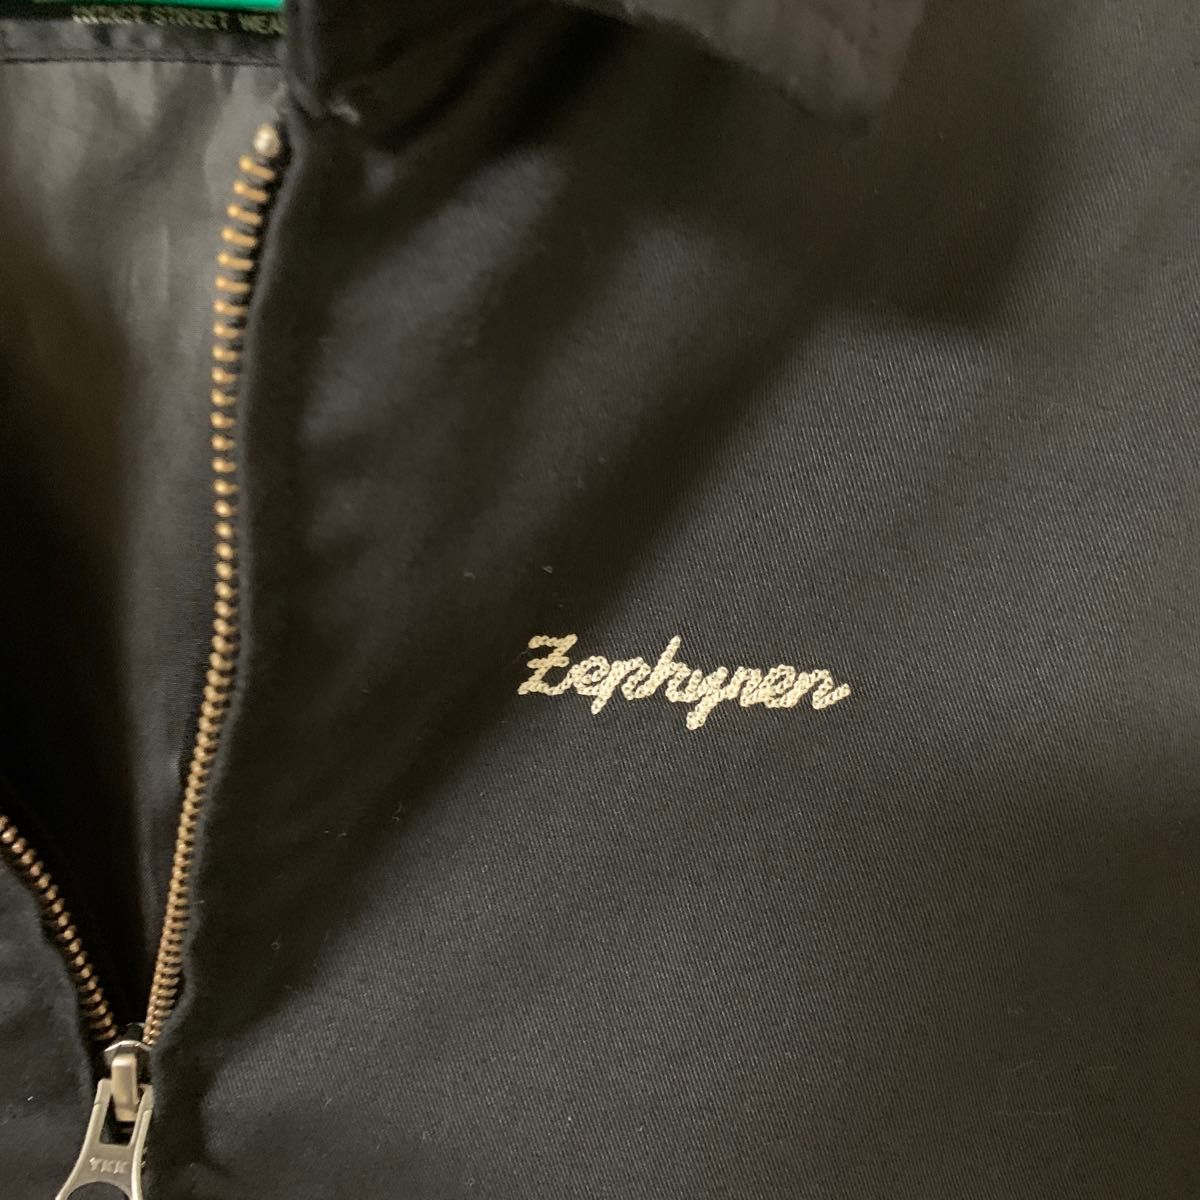 ZEPHYREN(ゼファレン)スイングトップジャケット(ブラック)超美品